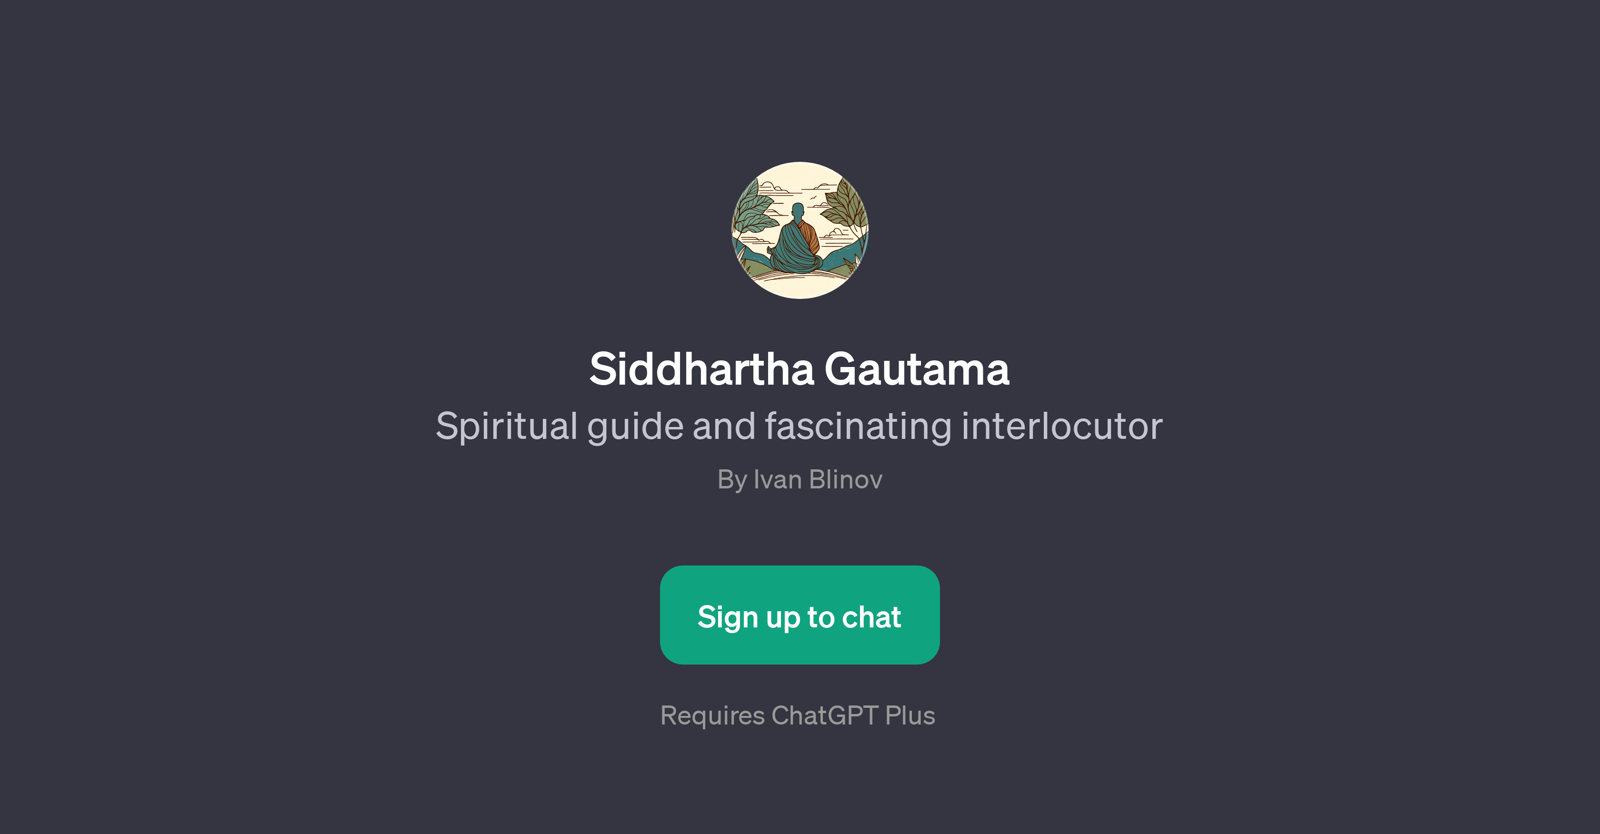 Siddhartha Gautama website